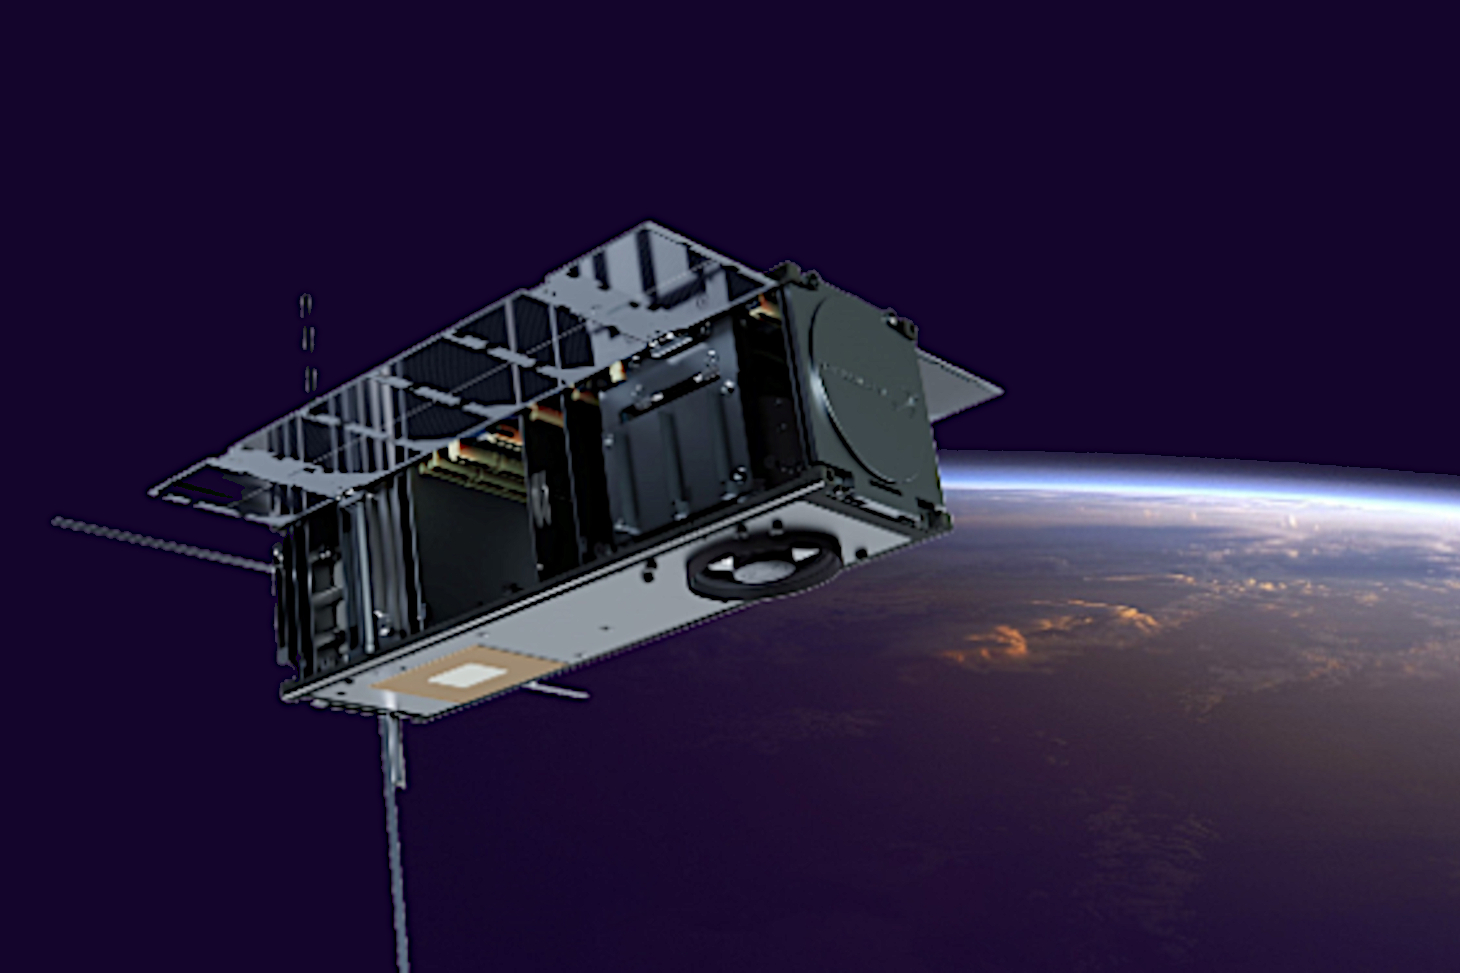 STORK, SatRevolution's shared nano-satellite, containing the ThingSat payload ©SatRevolution